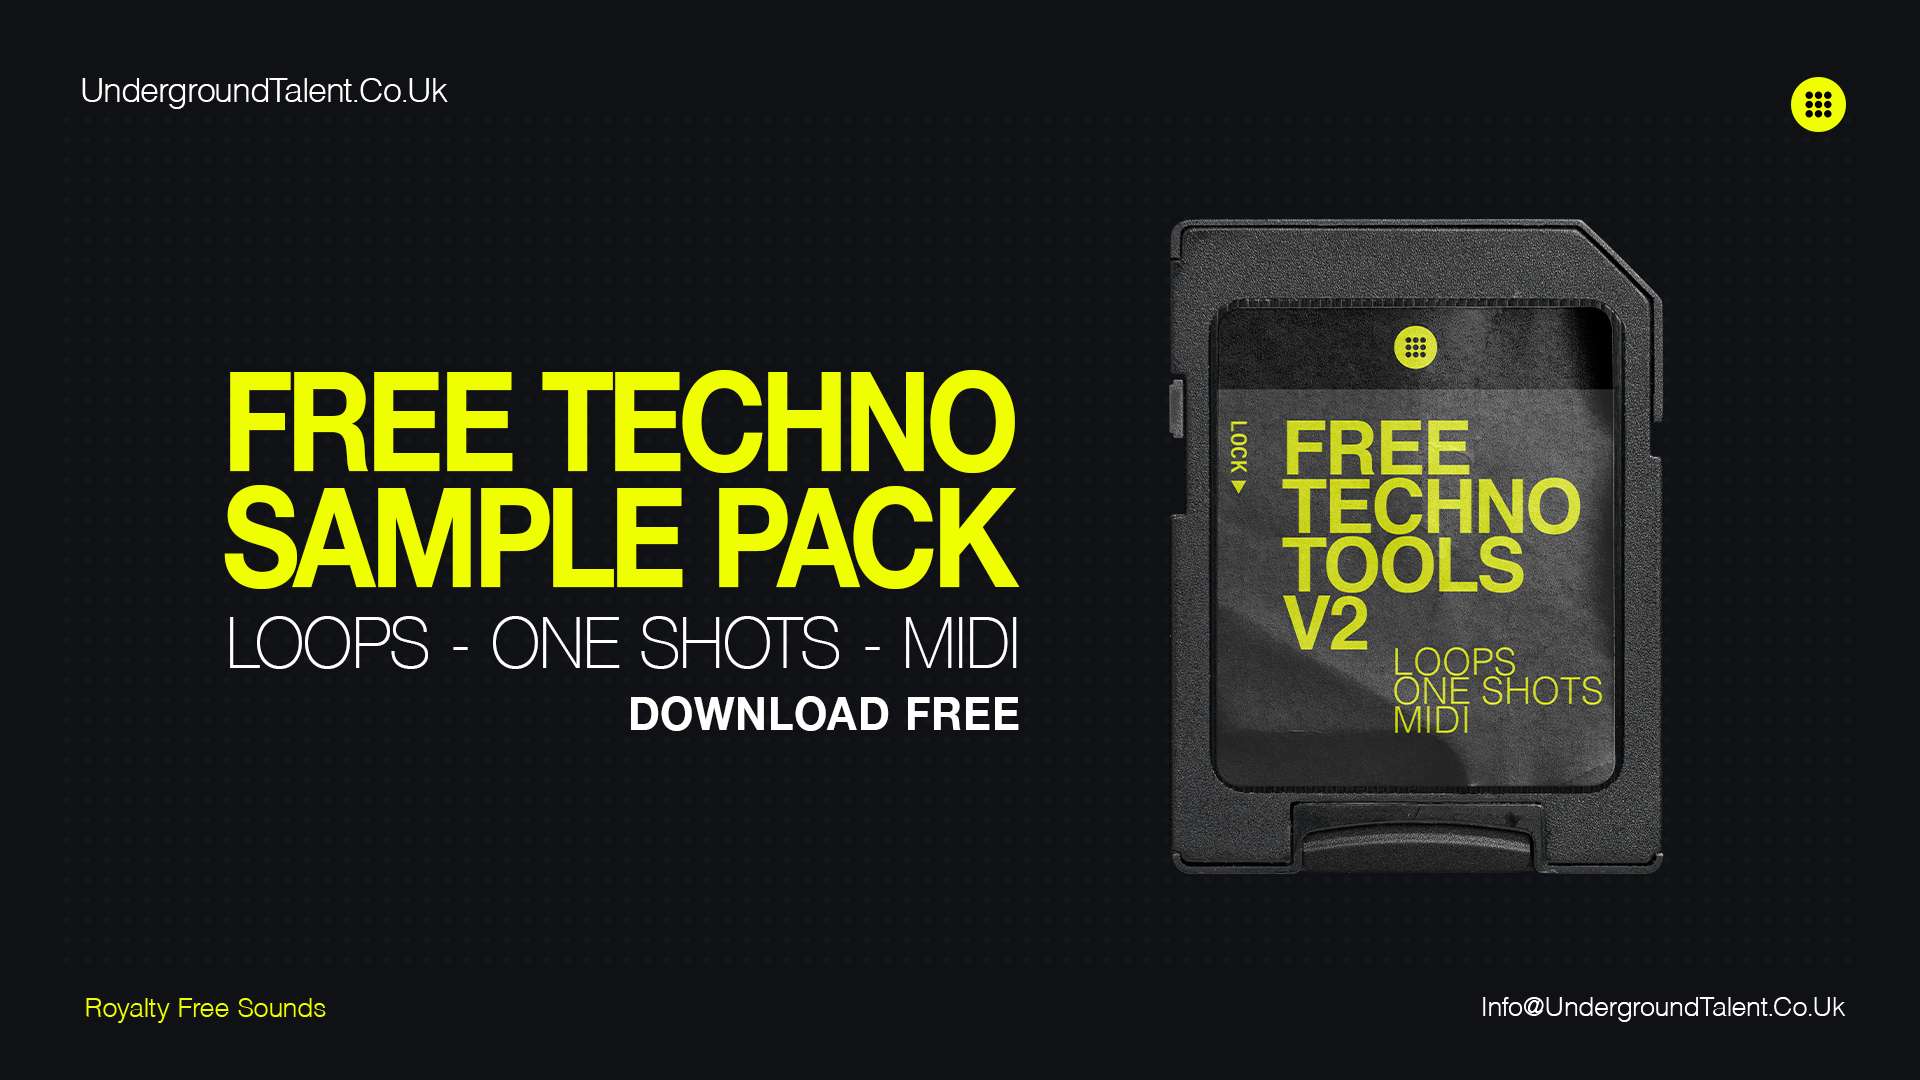 Free Techno Sample Packs | Free Techno Tools V2